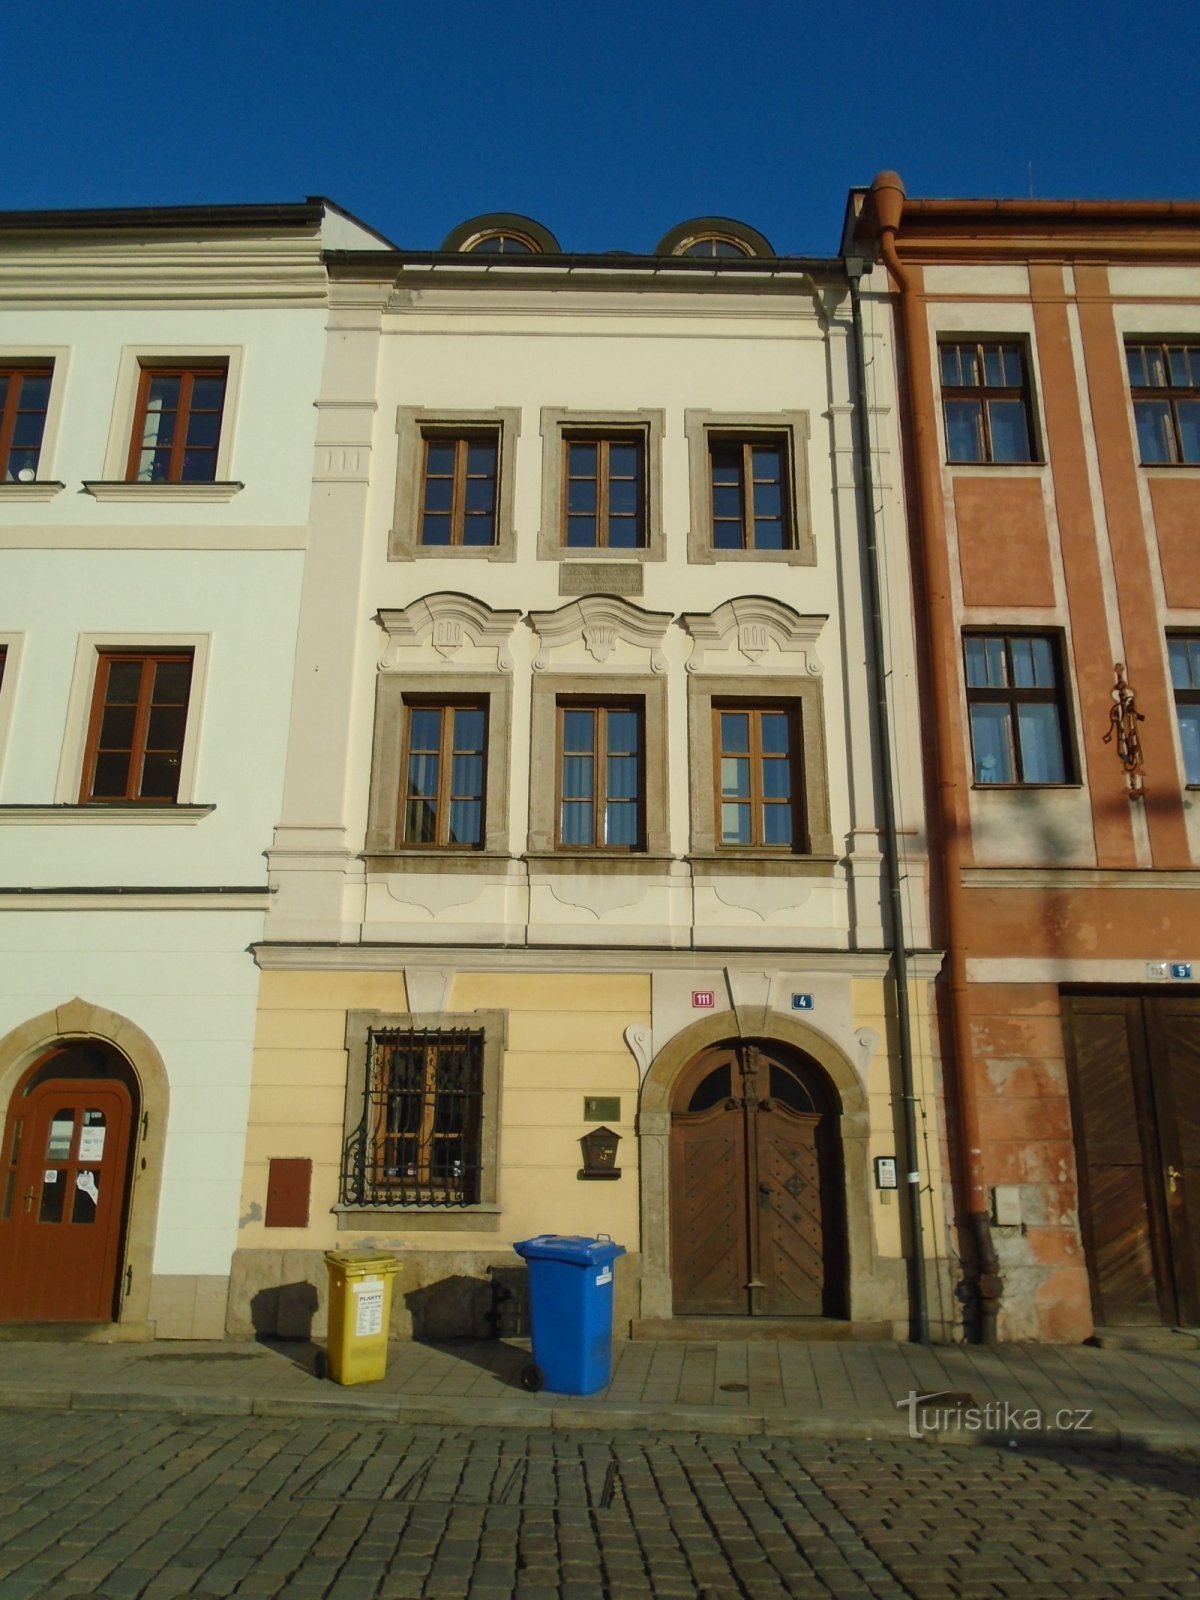 Malé náměstí nº 111 (Hradec Králové, 30.1.2019 de abril de XNUMX)